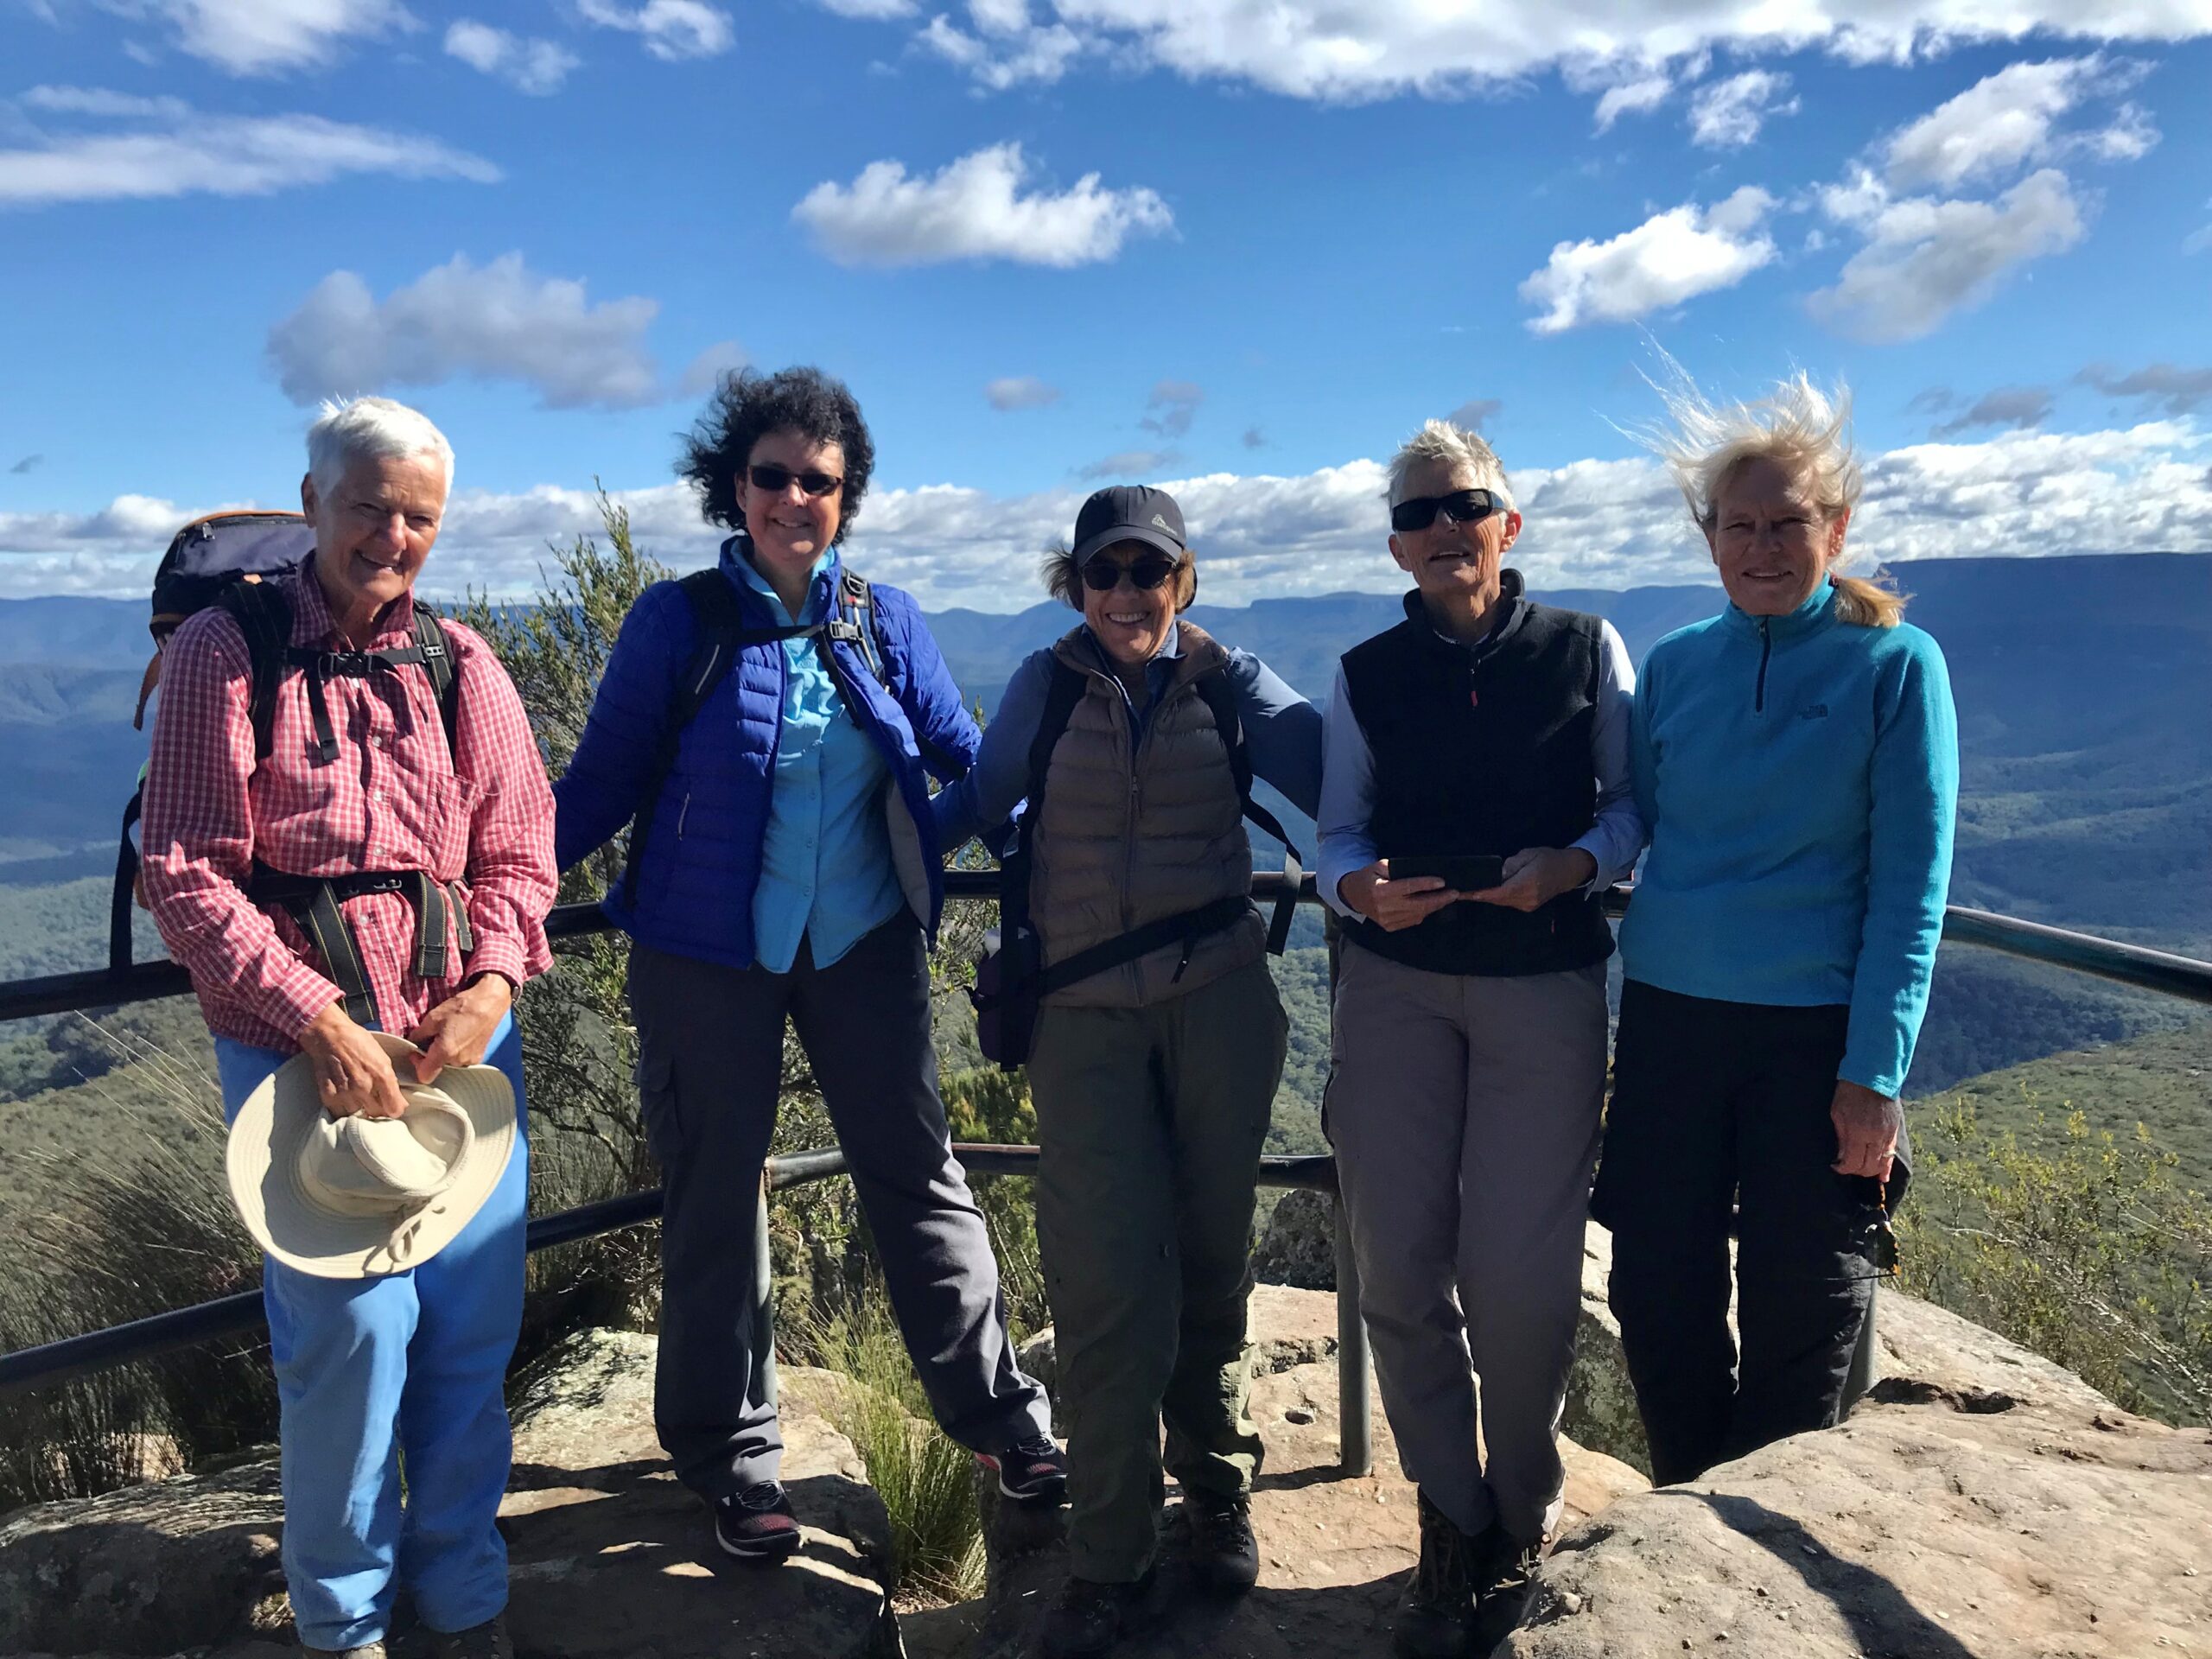 Bushwalkers Vera Mastinos, Robyn Finucane, Jacqui Warnock, Kay Durham and Sally Appleton at Pigeonhouse Mountain, NSW South Coast.